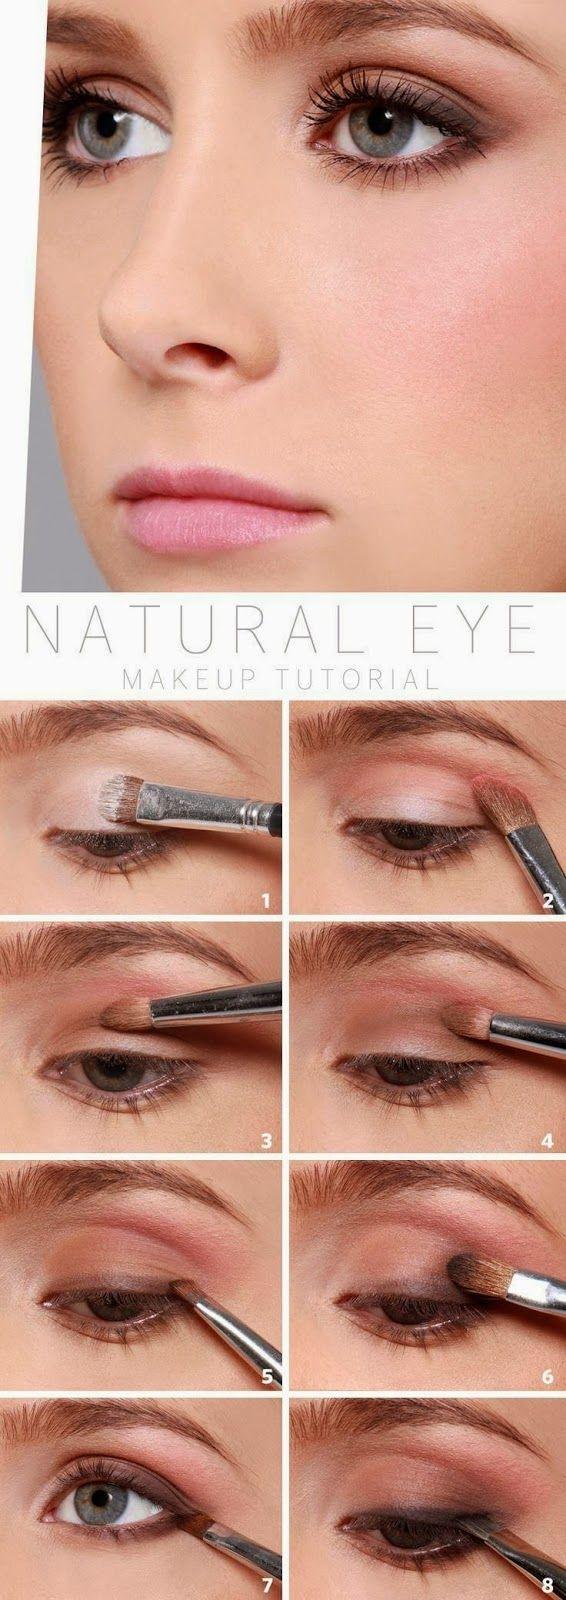 Mariage - Top 10 Tutorials For Natural Eye Make-Up